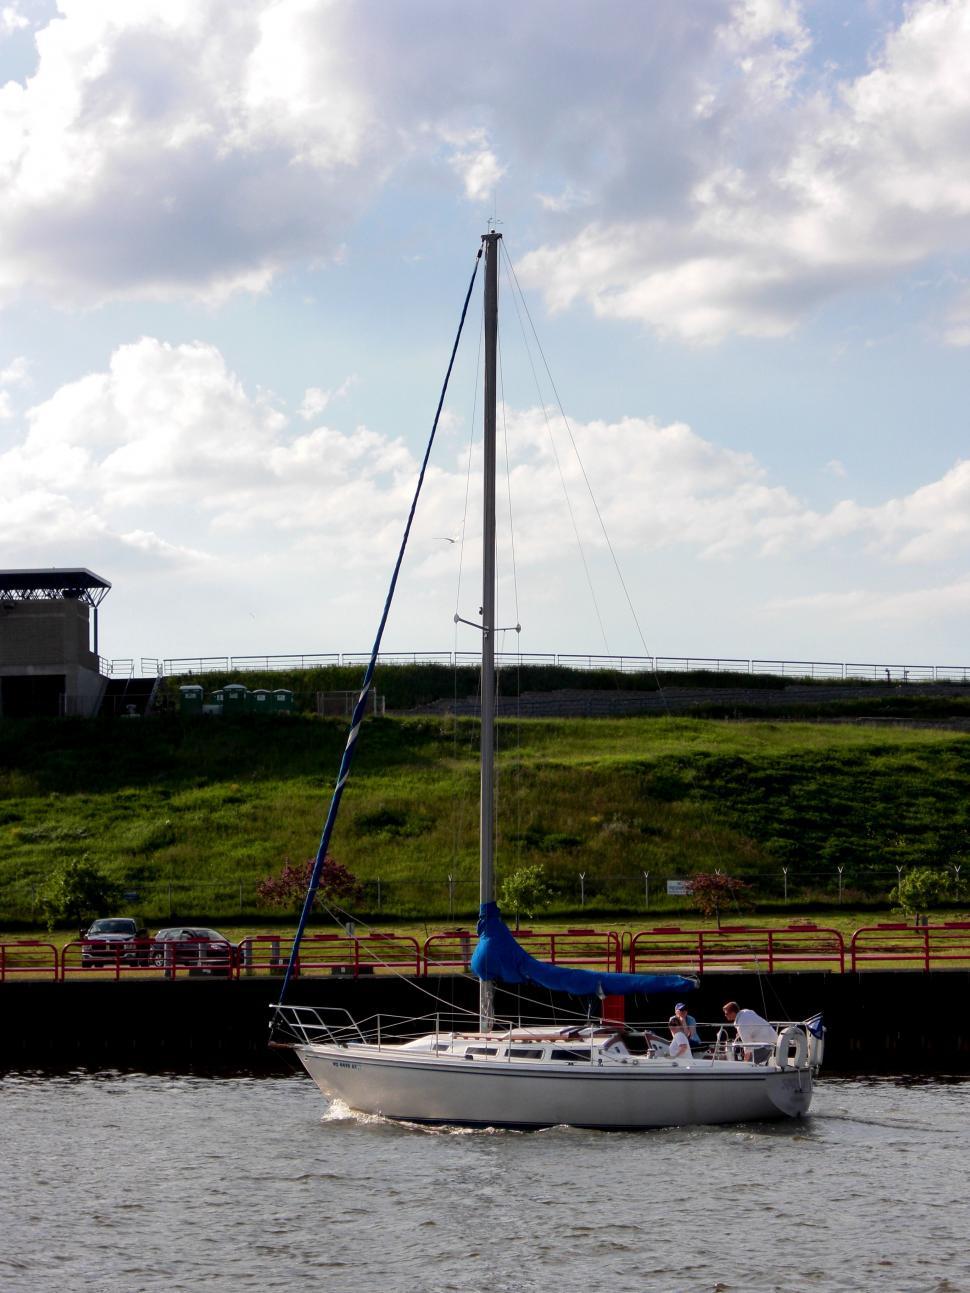 Free Image of A Sailboat Sailing Near a Dock 